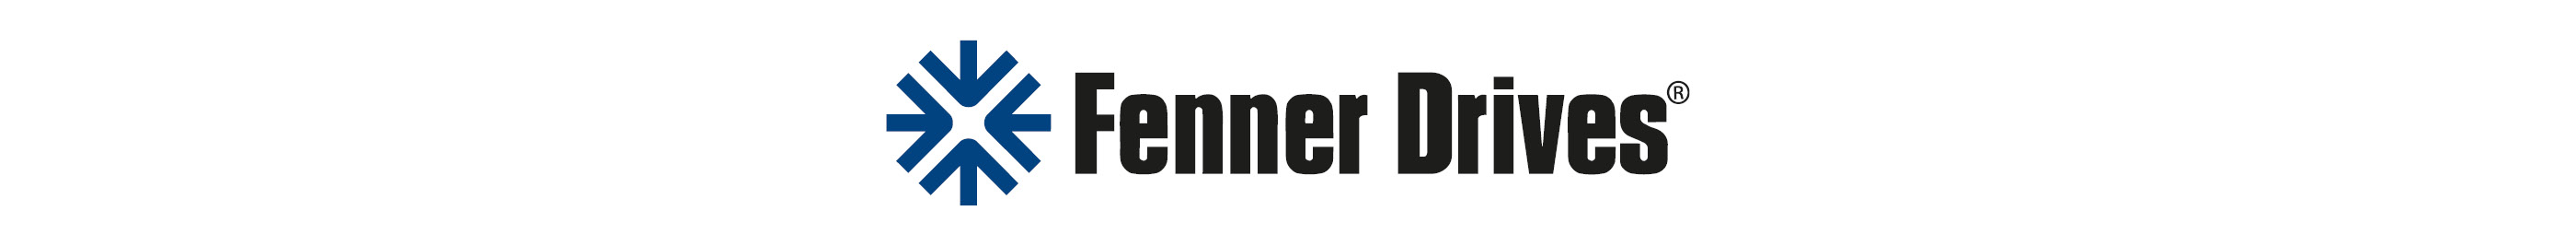 Fenner-Drives_eShop.jpg